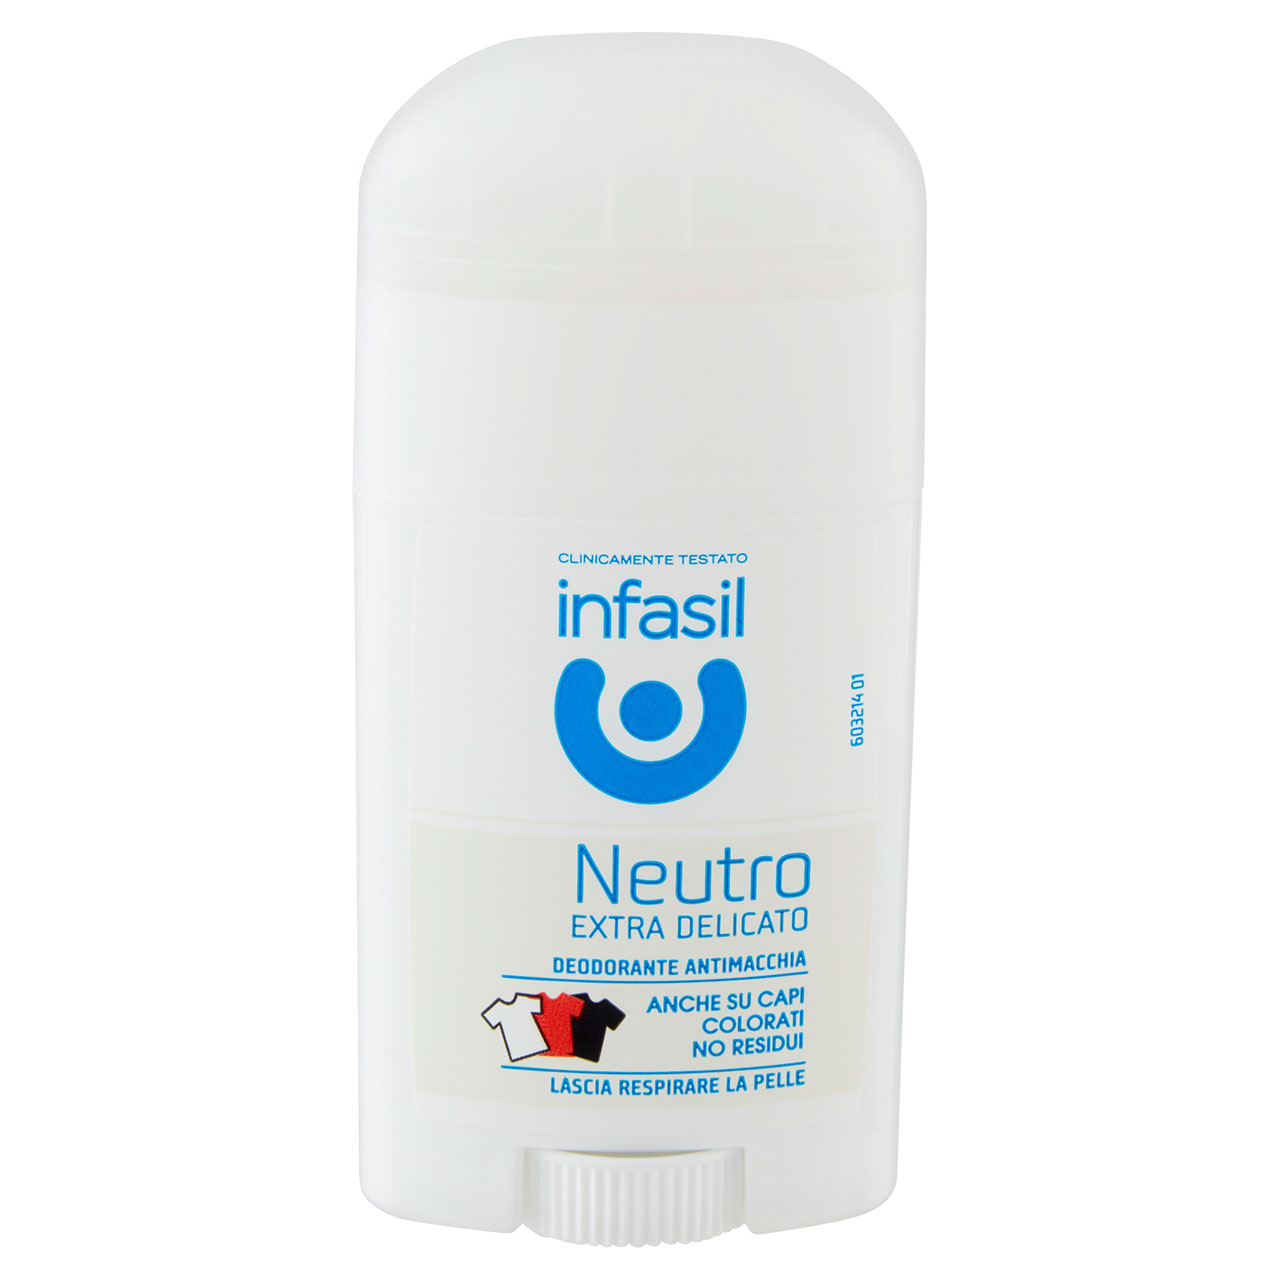 infasil Neutro Extra Delicato in vendita online